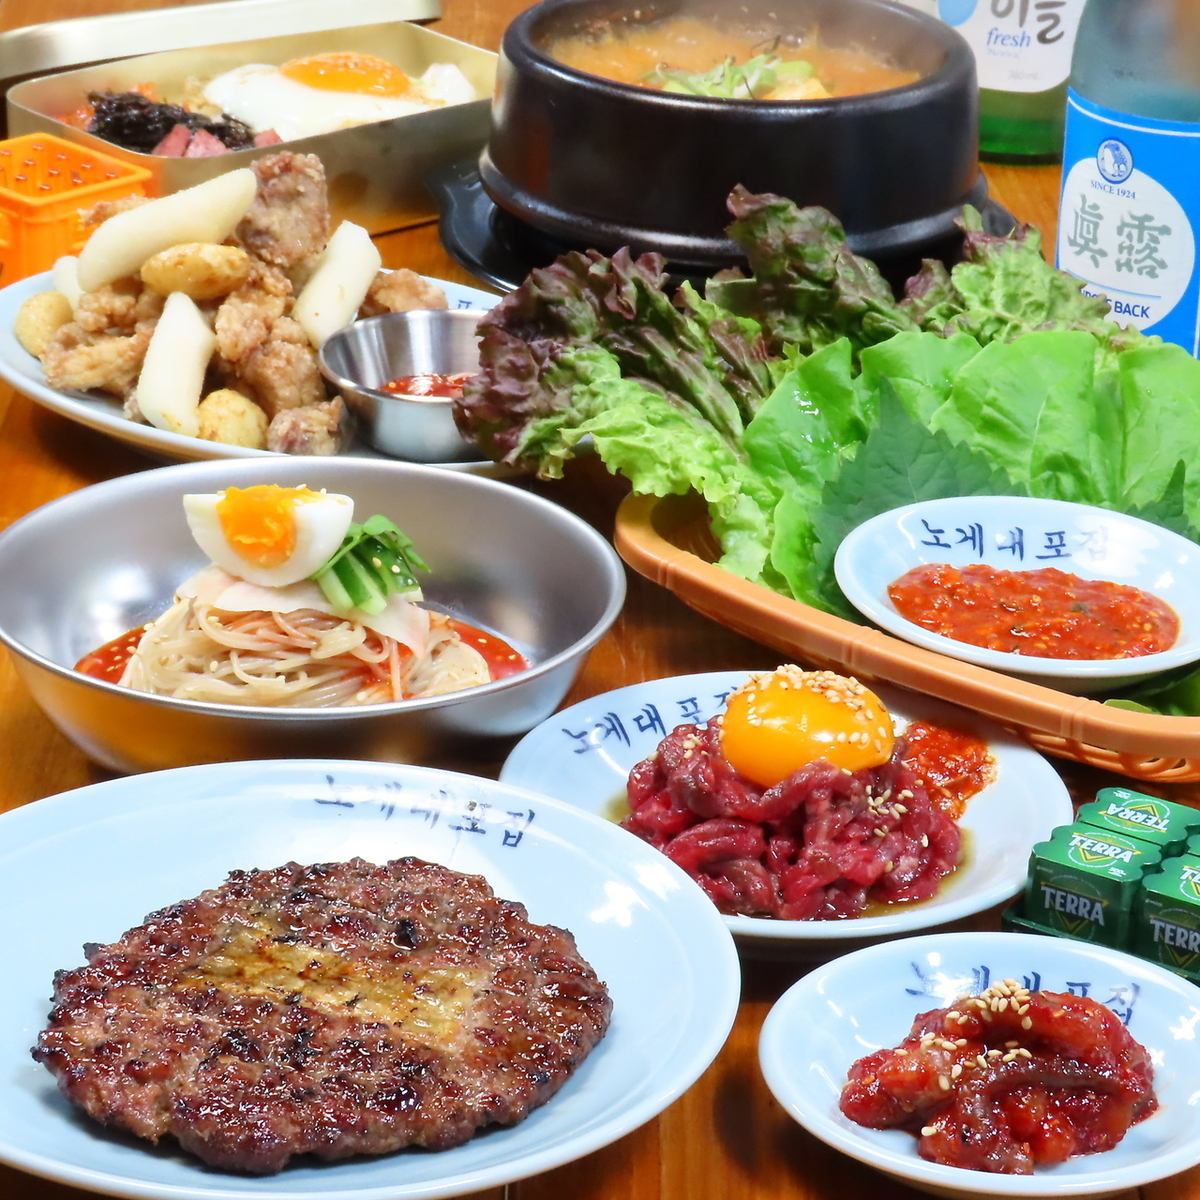 Please enjoy our Korean cuisine!